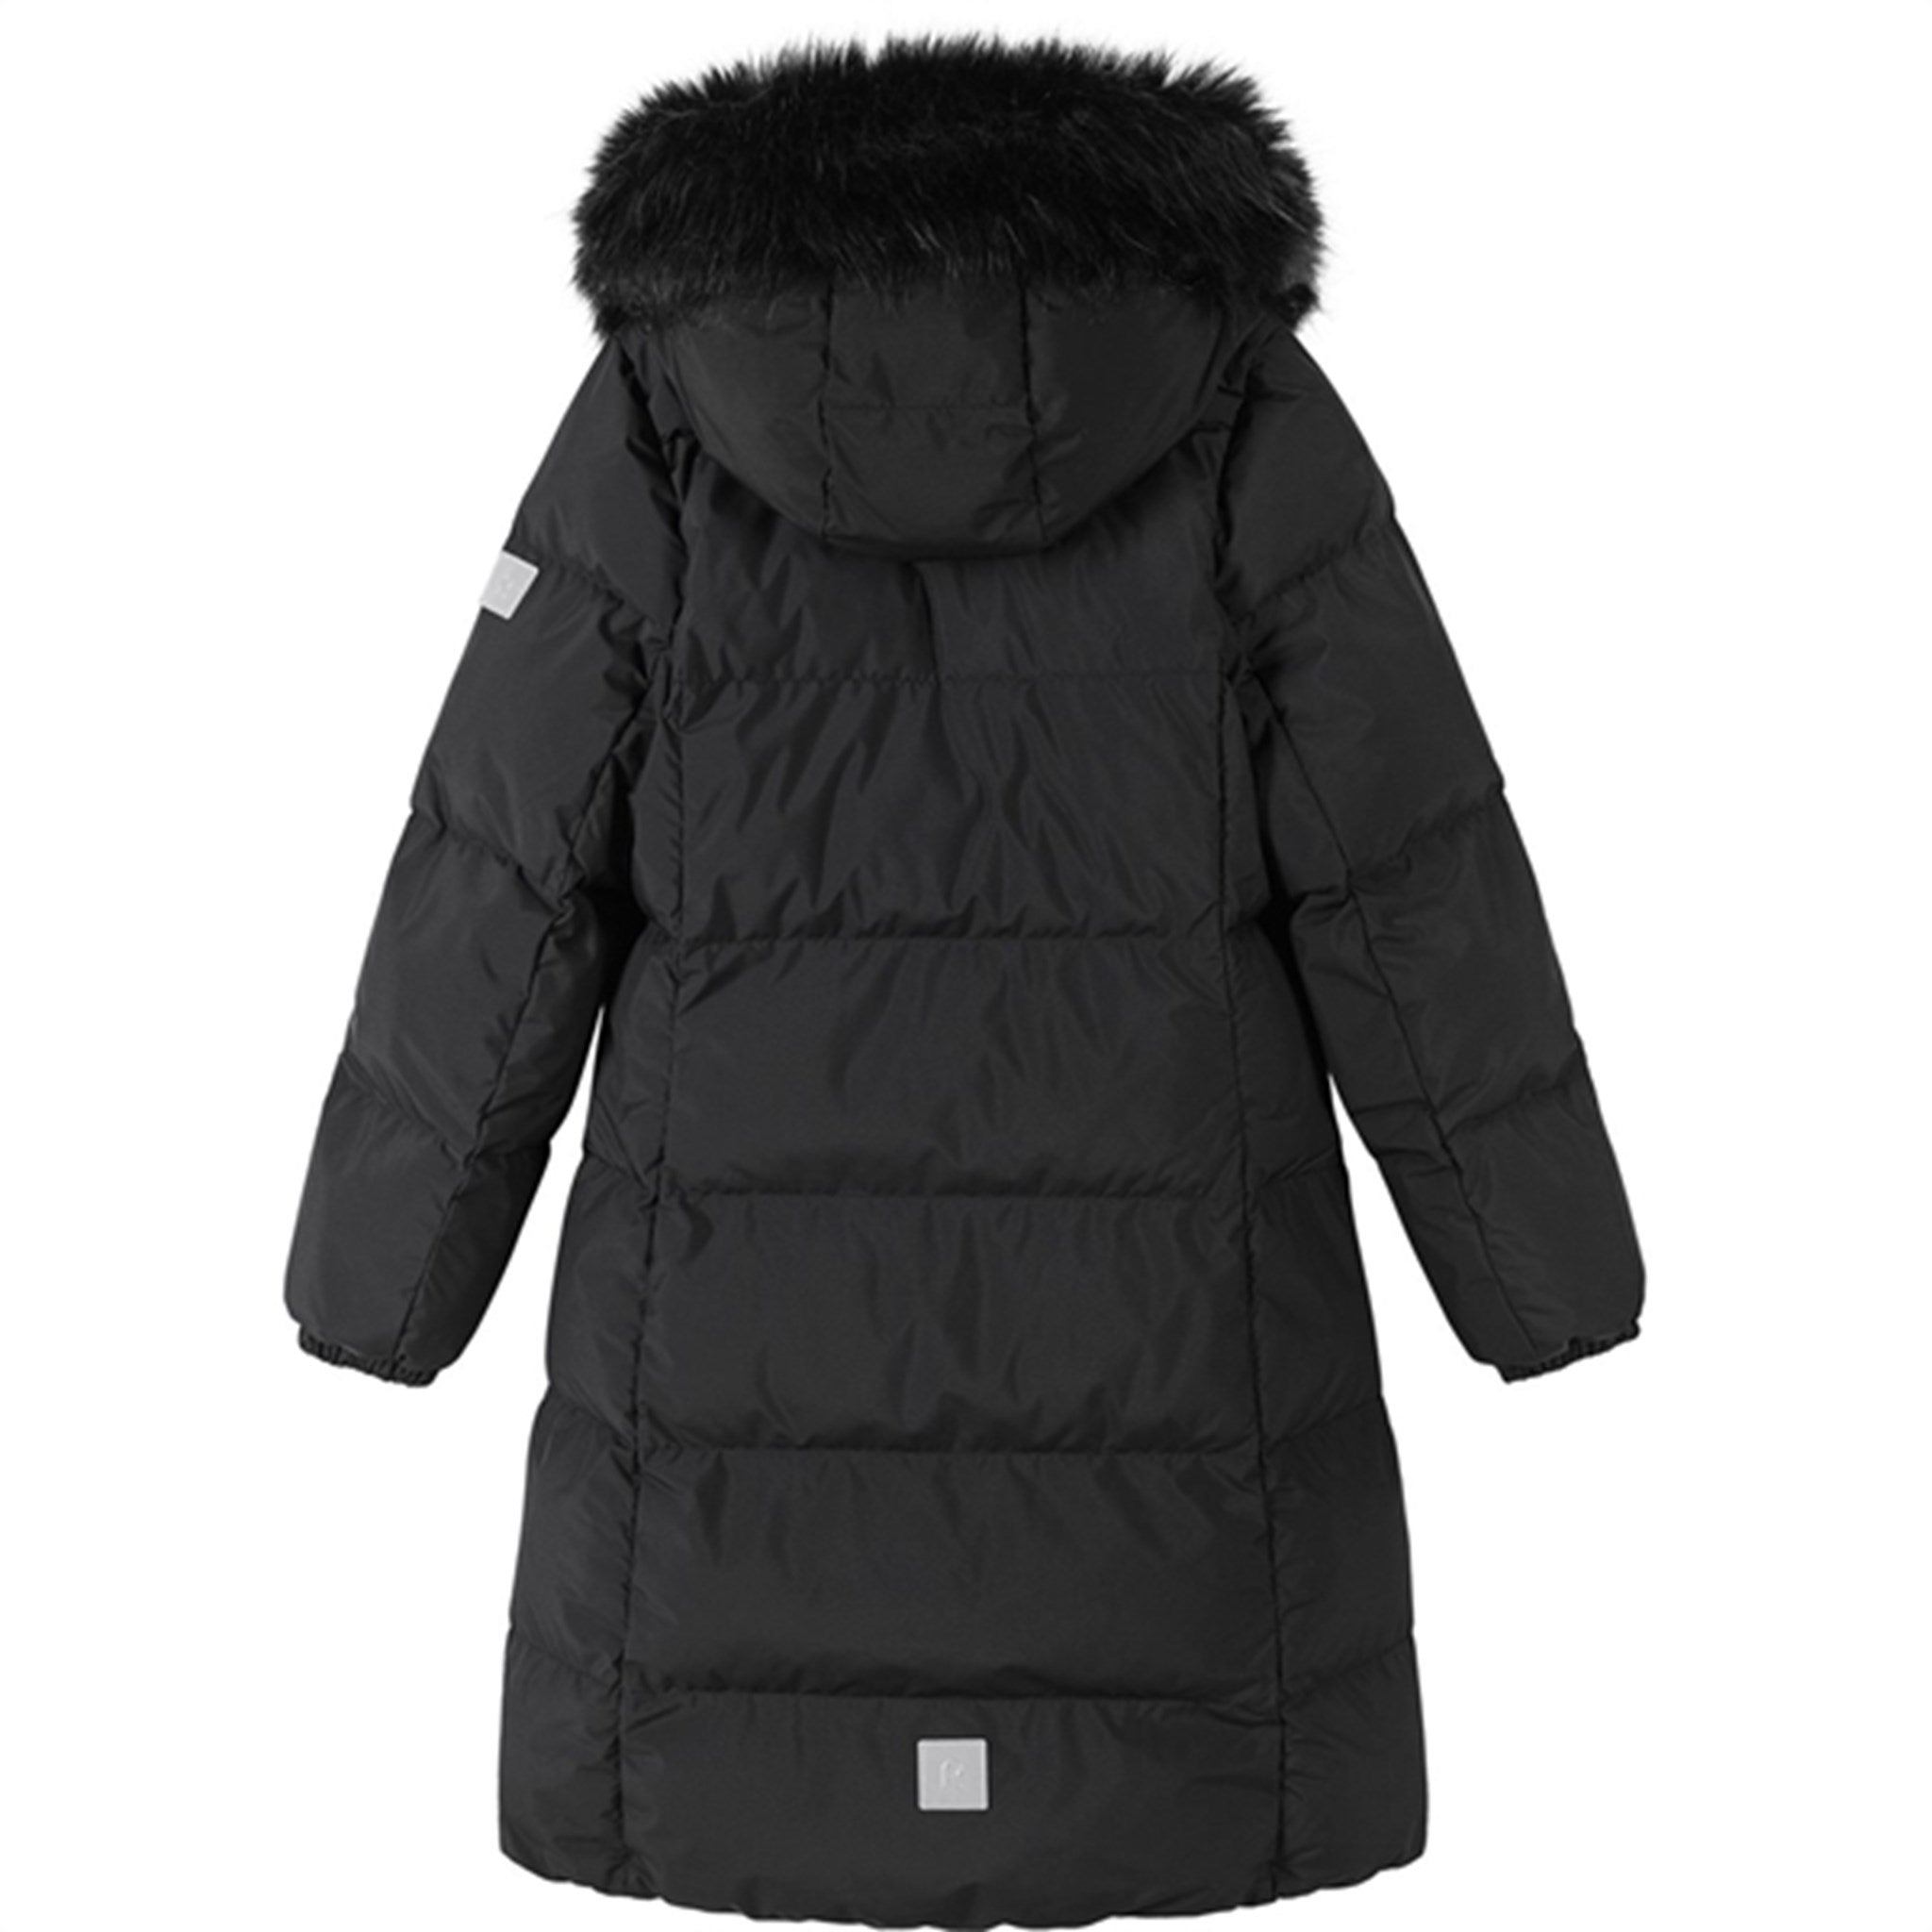 Reima Winter Jacket Siemaus Black 5